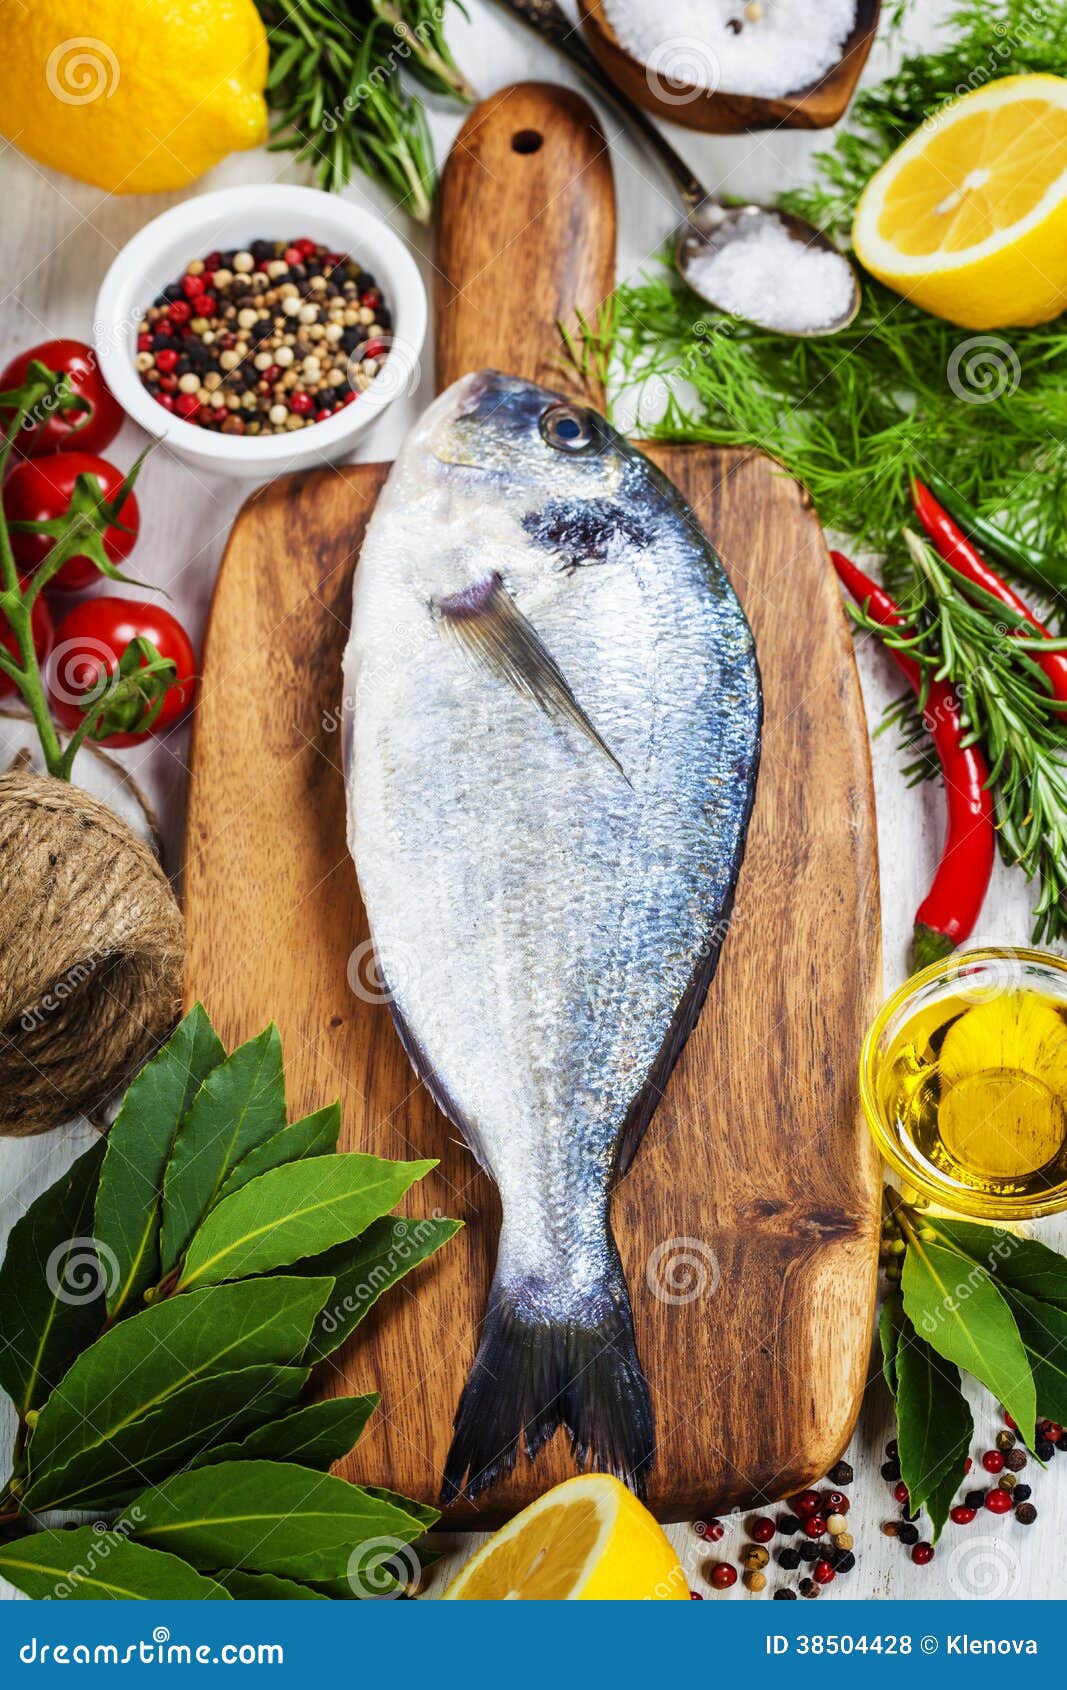 Cooking fish stock photo. Image of board, fish, preparation - 38504428